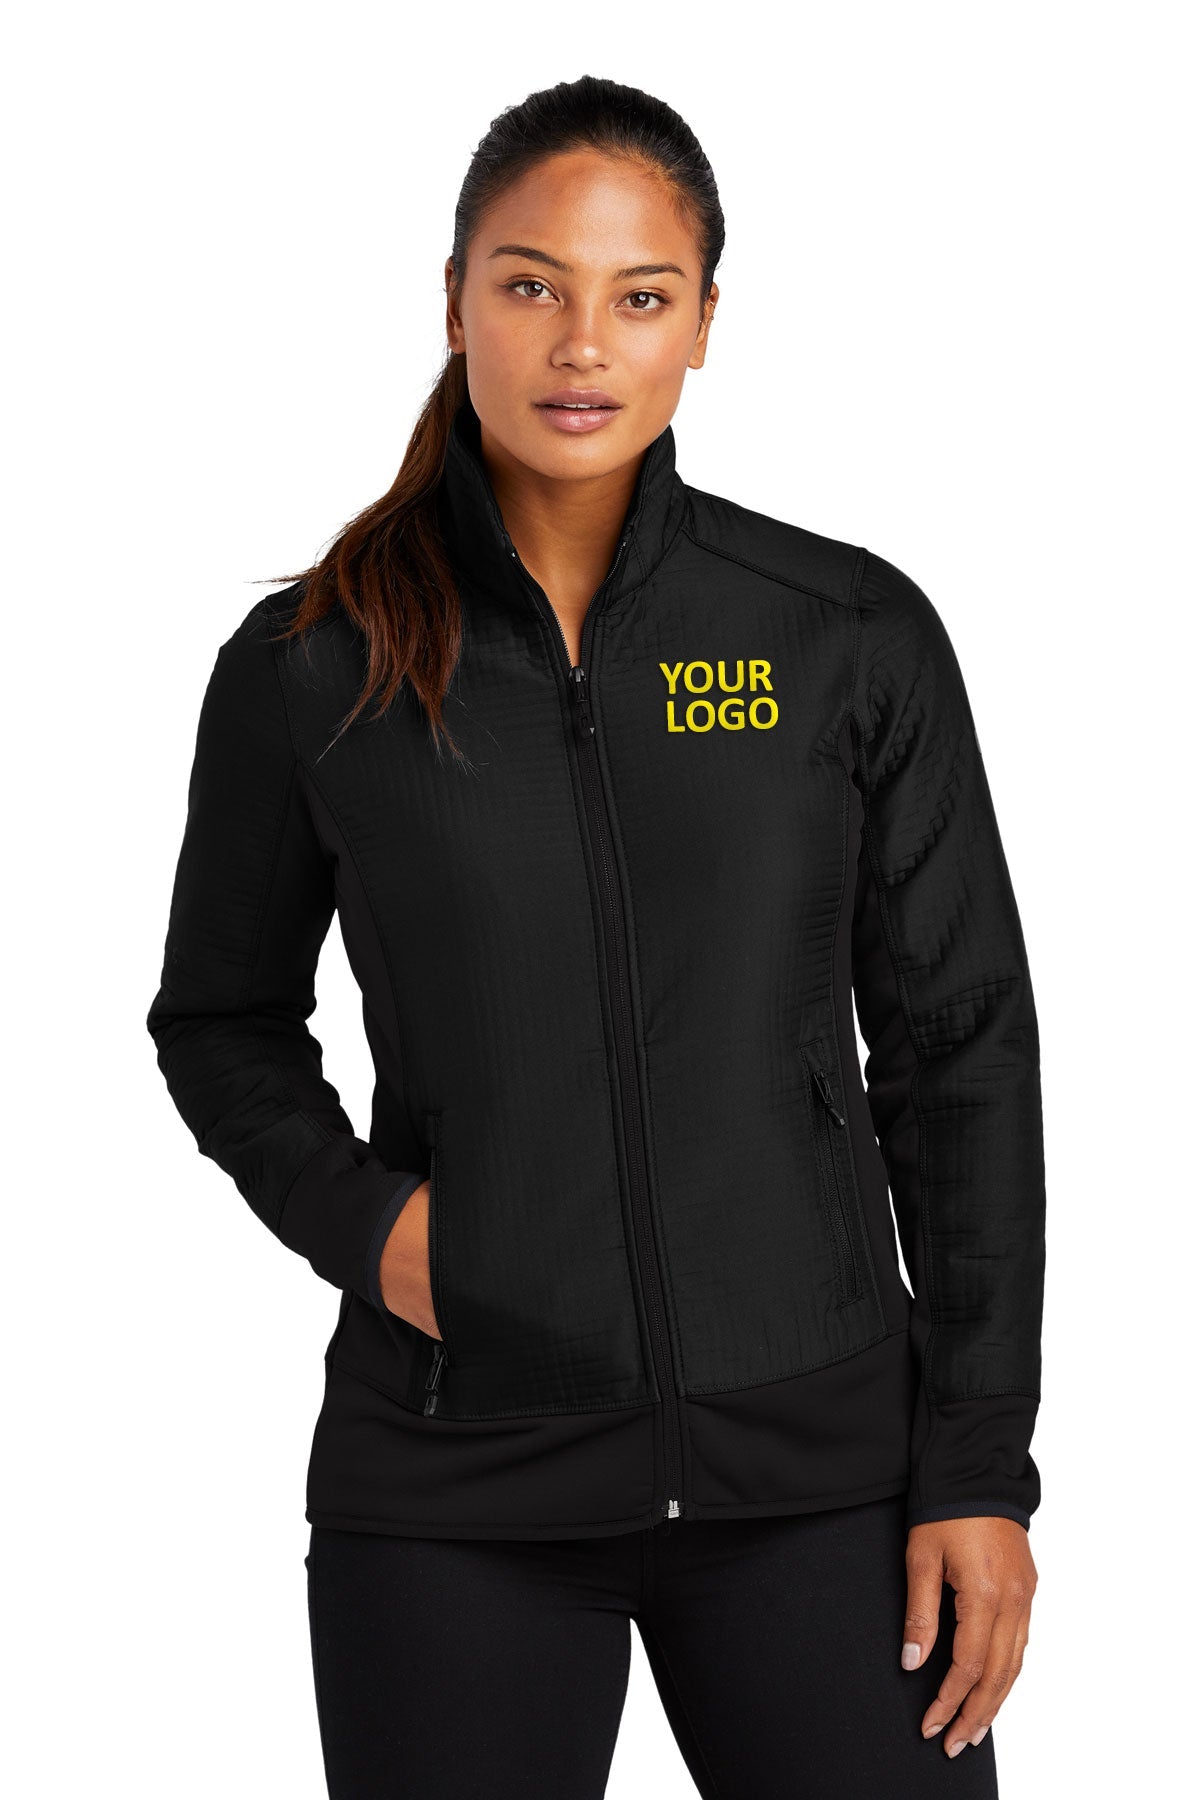 OGIO Blacktop LOG726 custom logo jackets